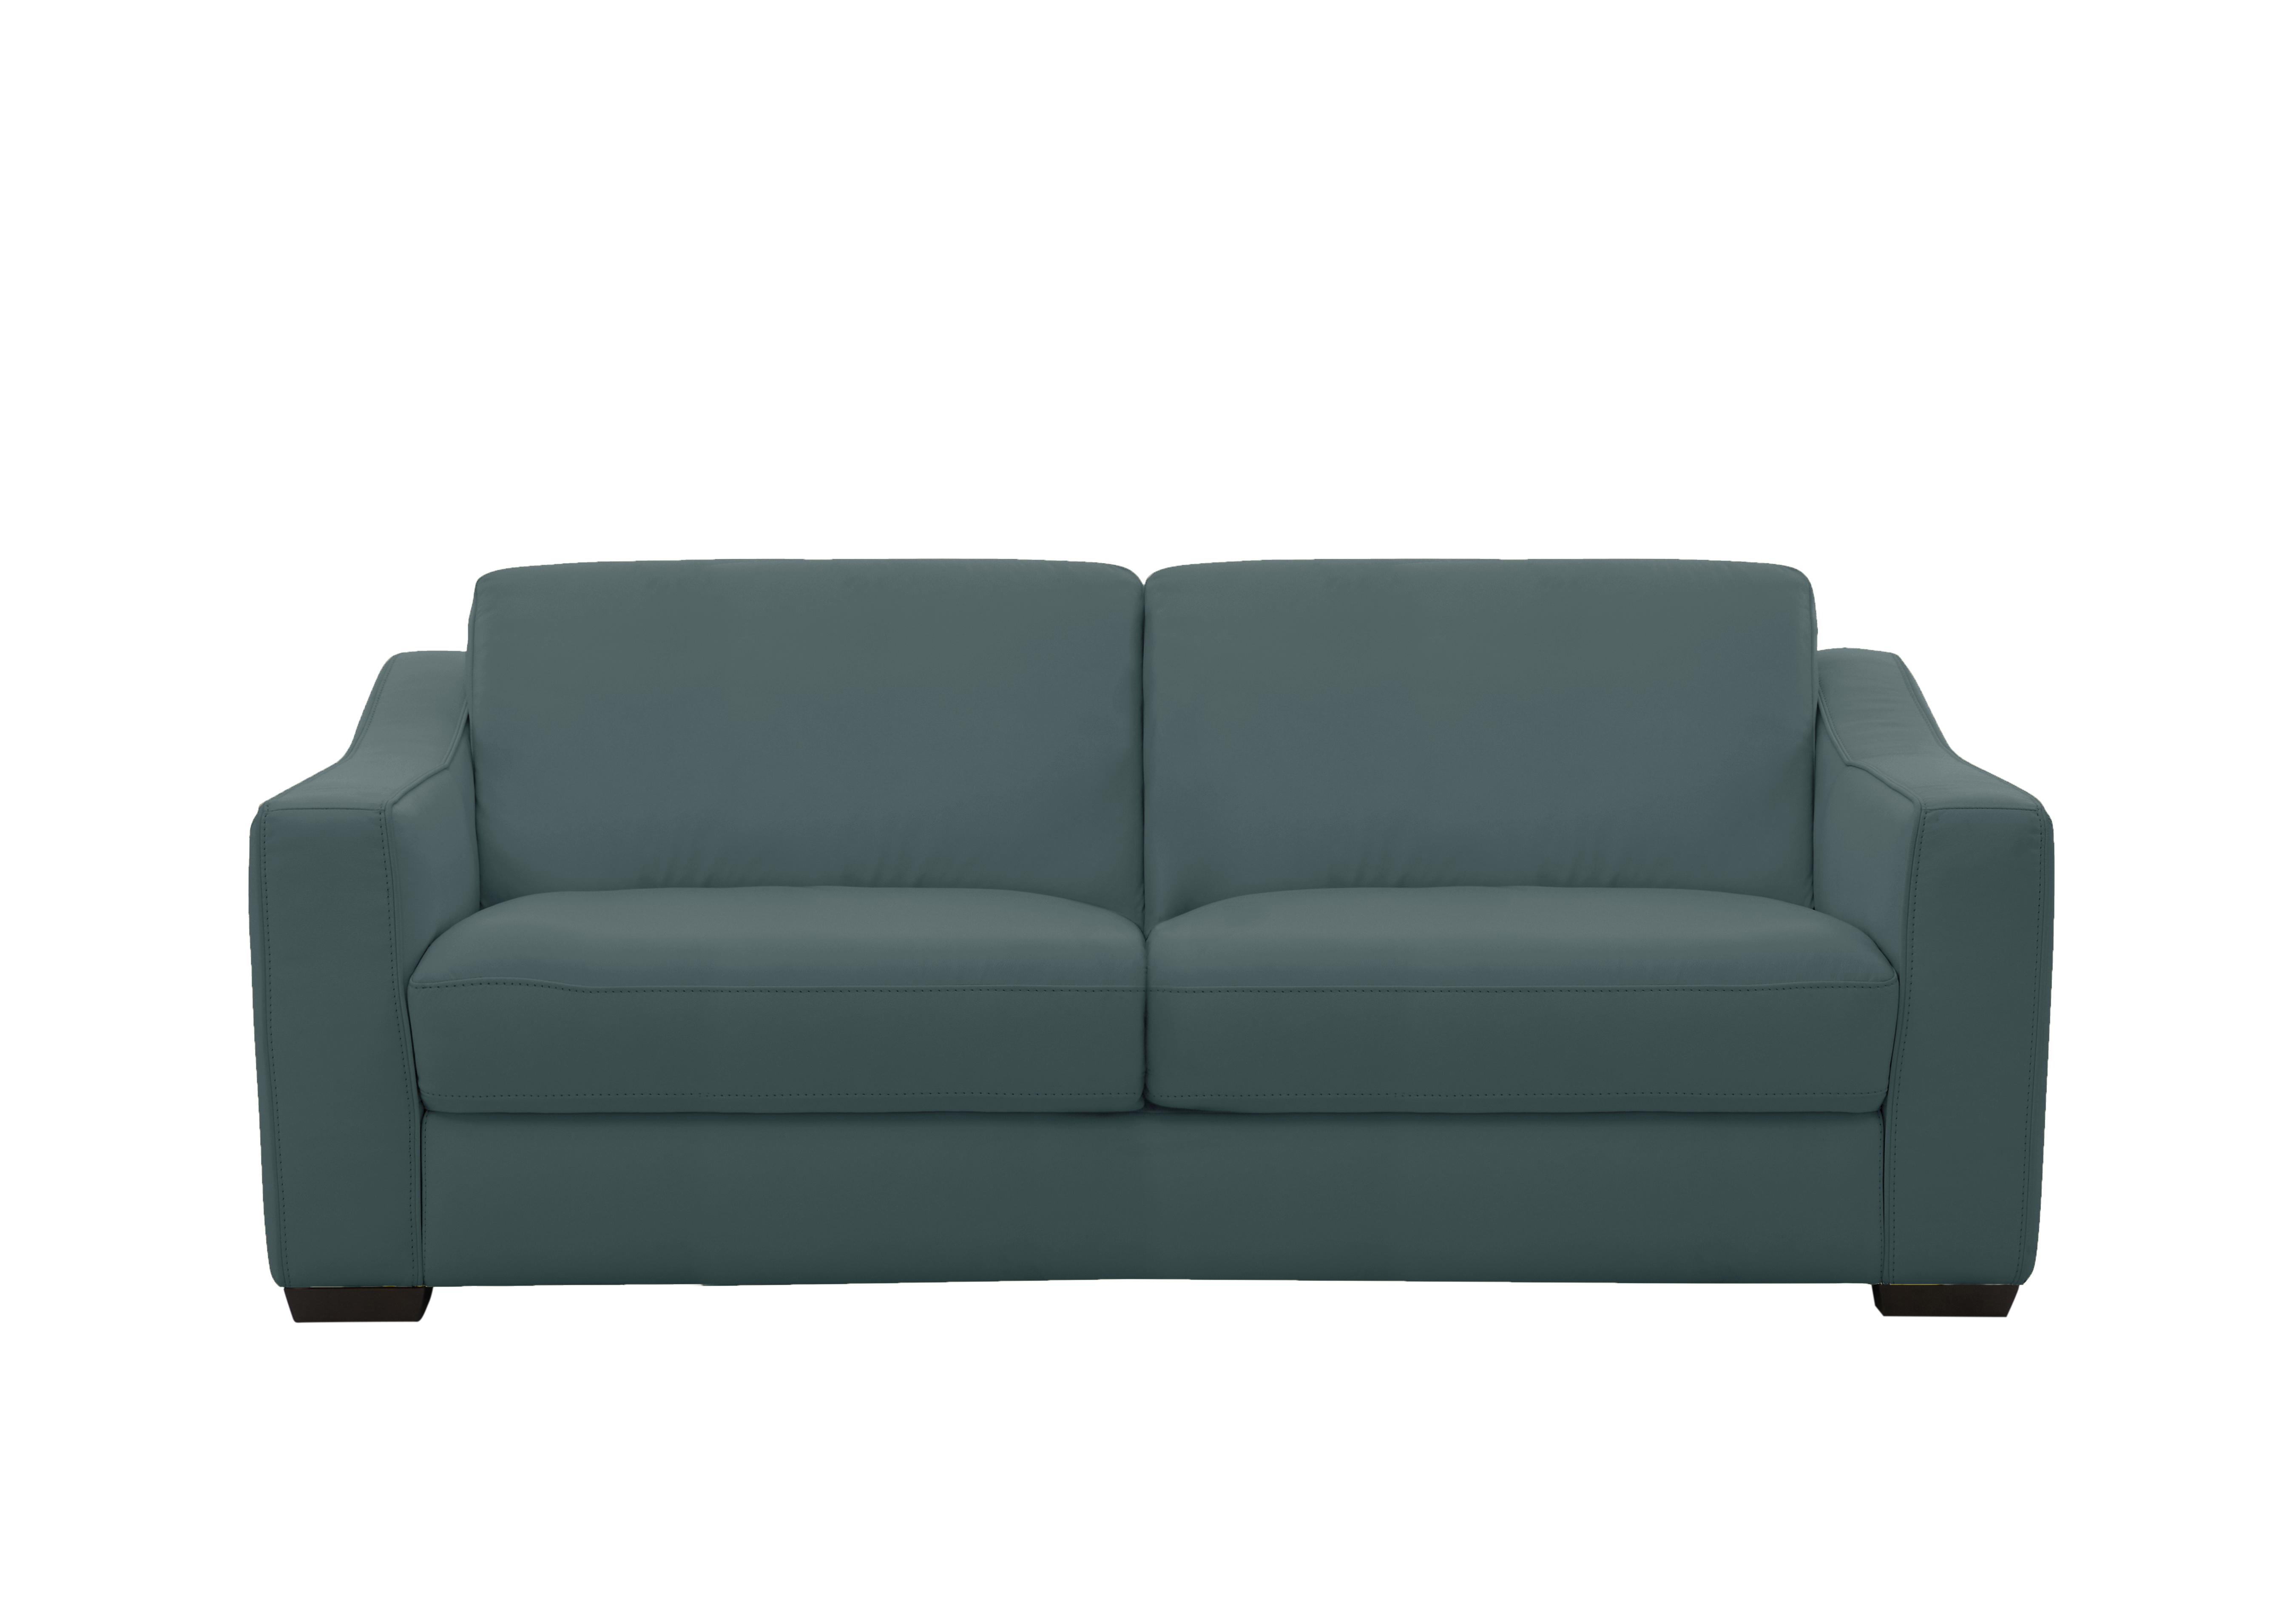 Optimus 3 Seater Leather Sofa in Bv-301e Lake Green on Furniture Village